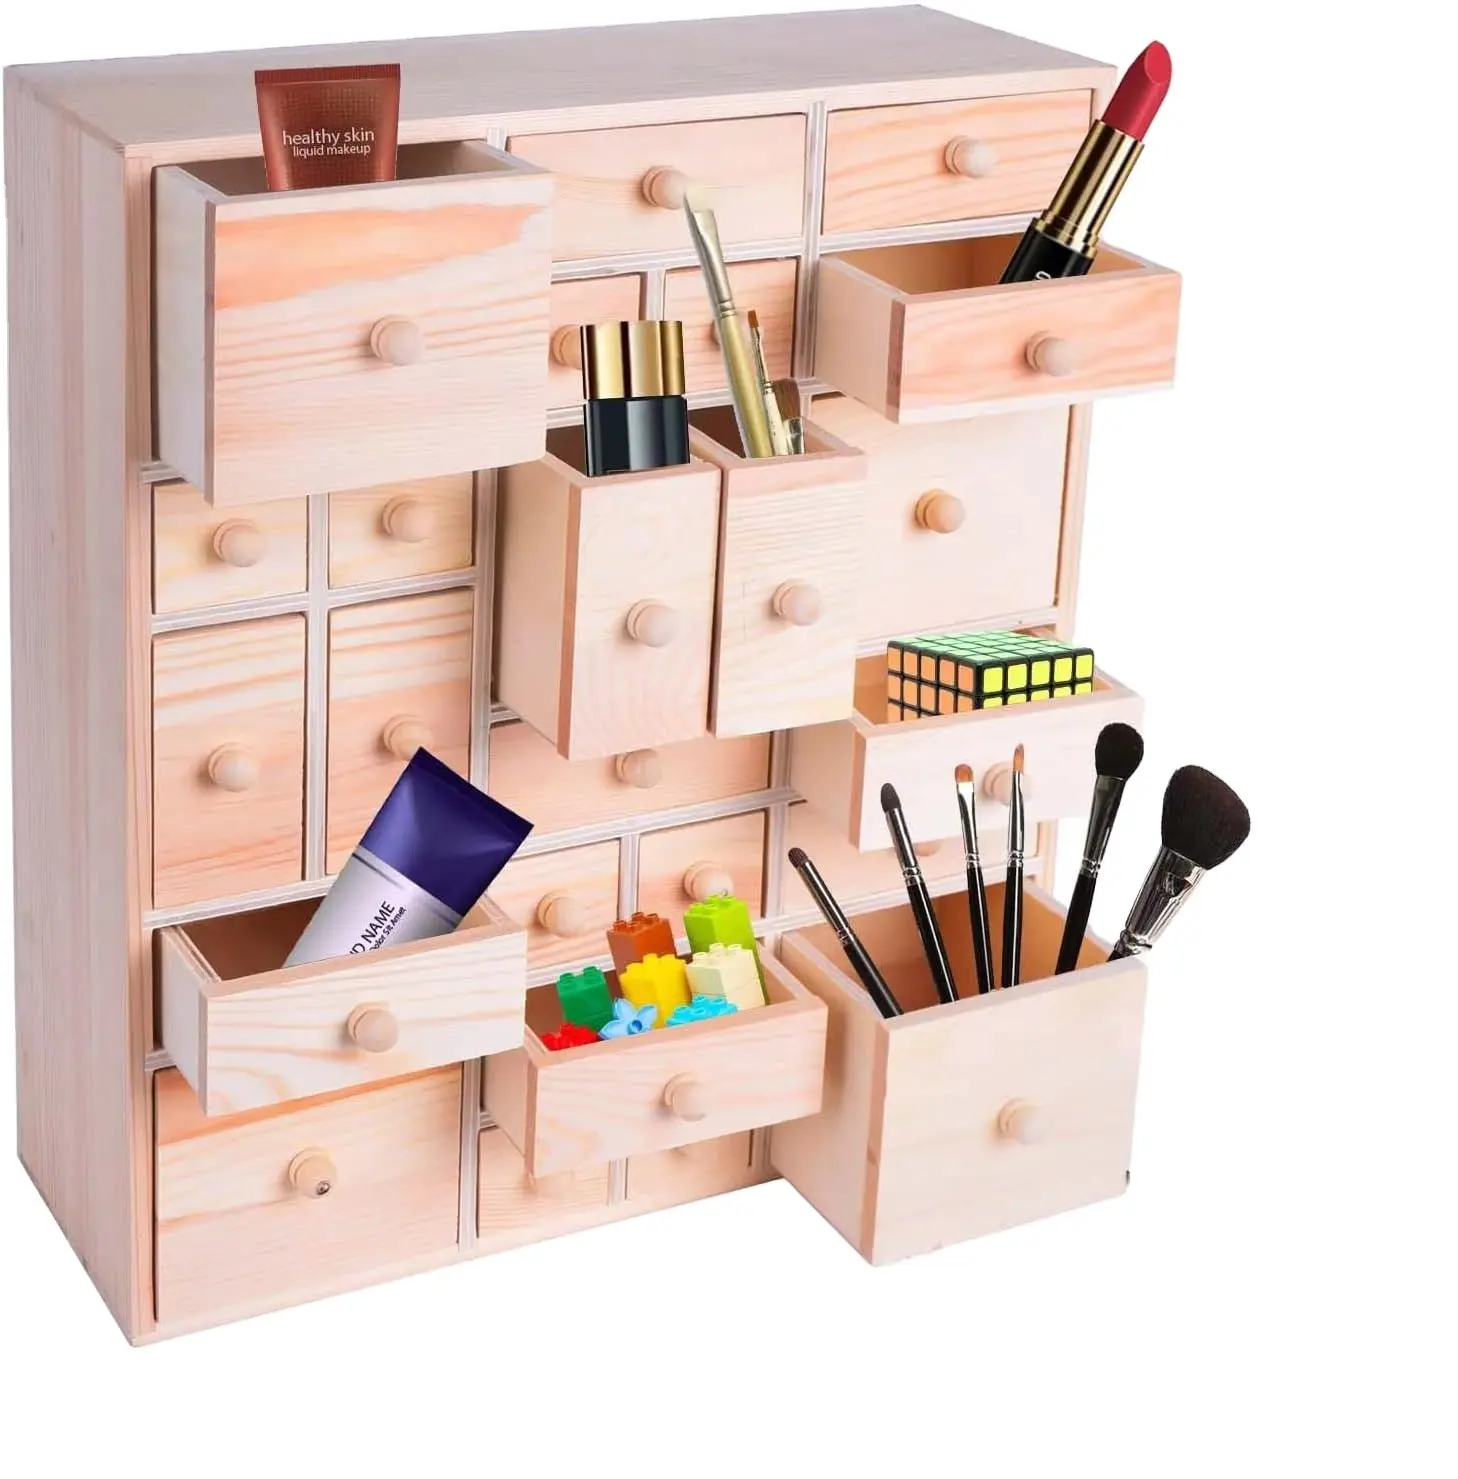 Customizable wooden DIY desktop organizer with 24 drawers for craft storage